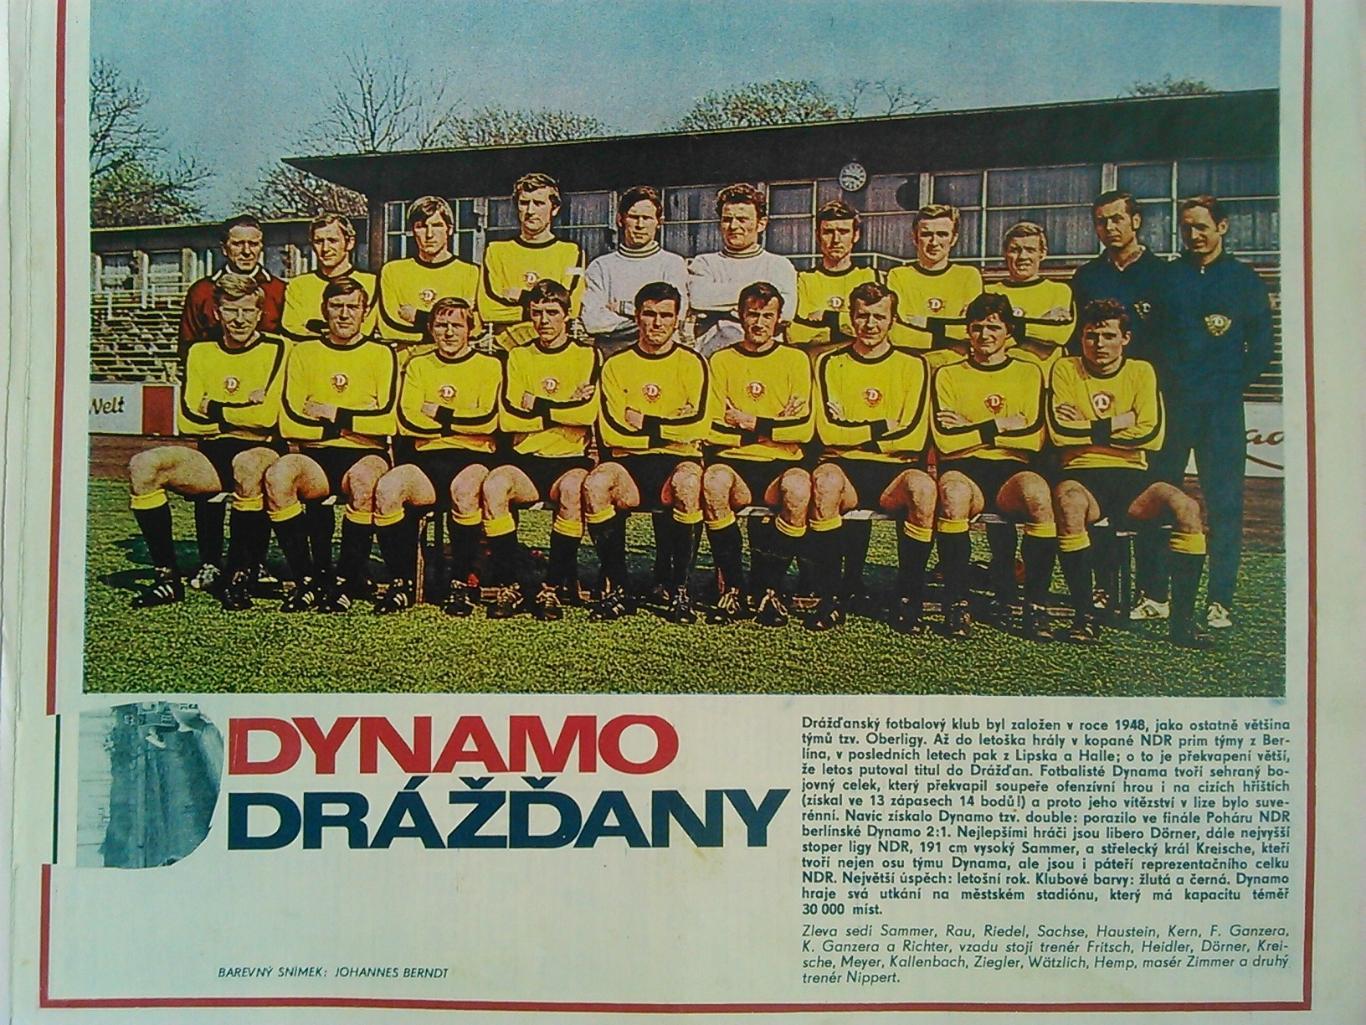 постер Dynamo Drazdany (ДИНАМ0 Дрезден-1971) Оптом скидки до 50%!